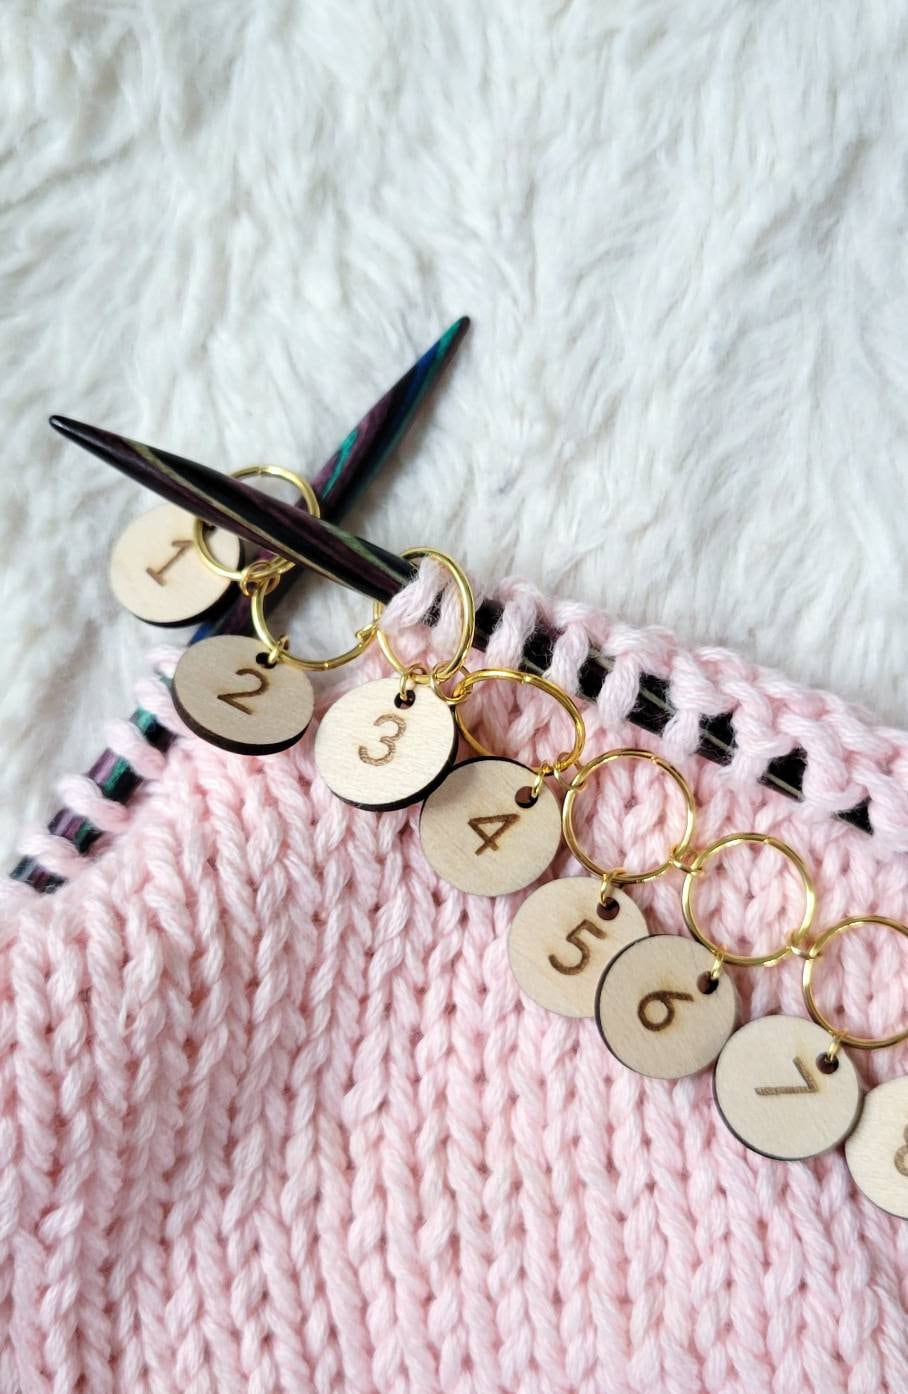 Elisel Colorful Knitting Stitch Counter Crochet Locking Stitch